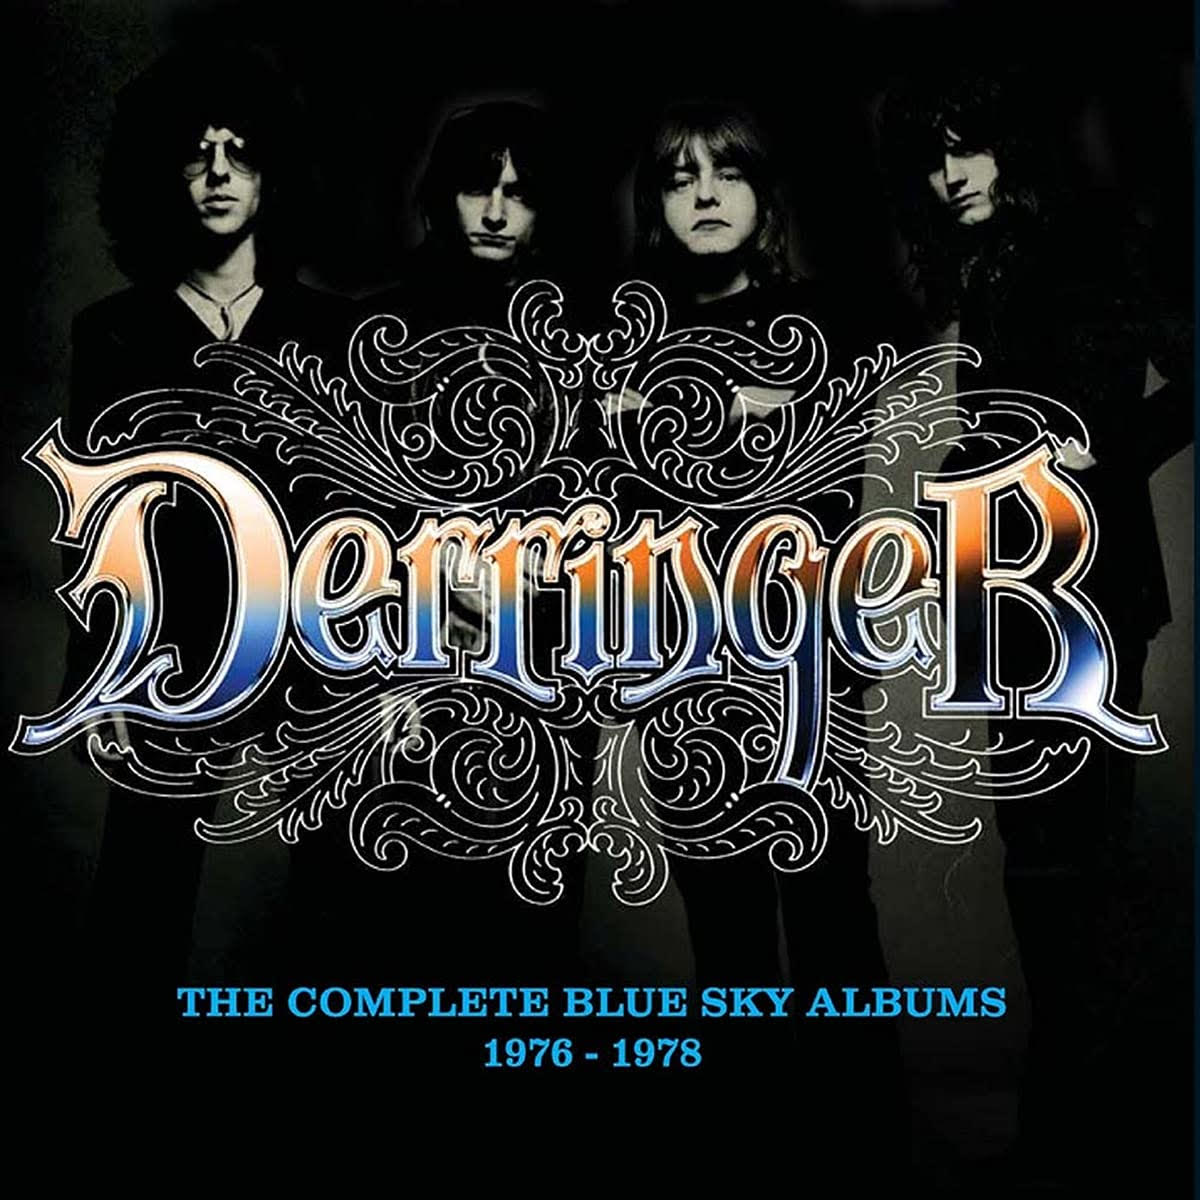 Rick Derringer - The Complete Blue Sky Albums 1976-1978 (5 CD Box Set - Imported)